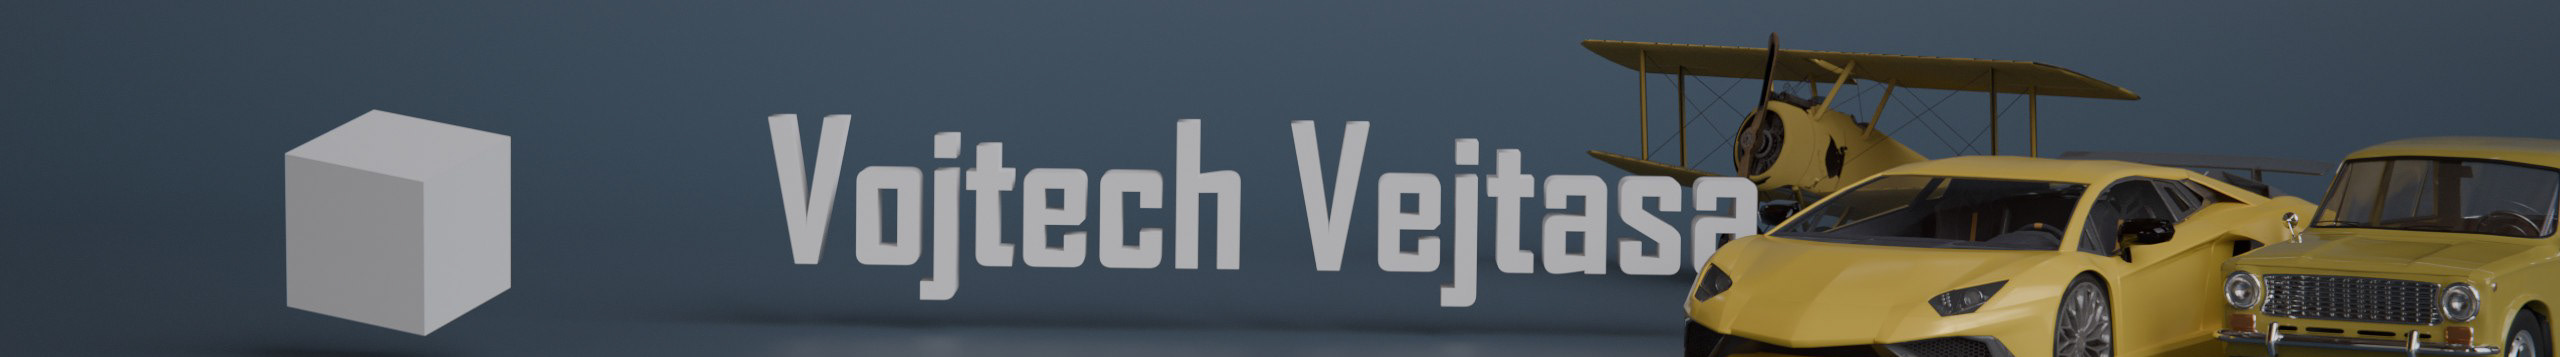 Vojtěch Vejtasa's profile banner